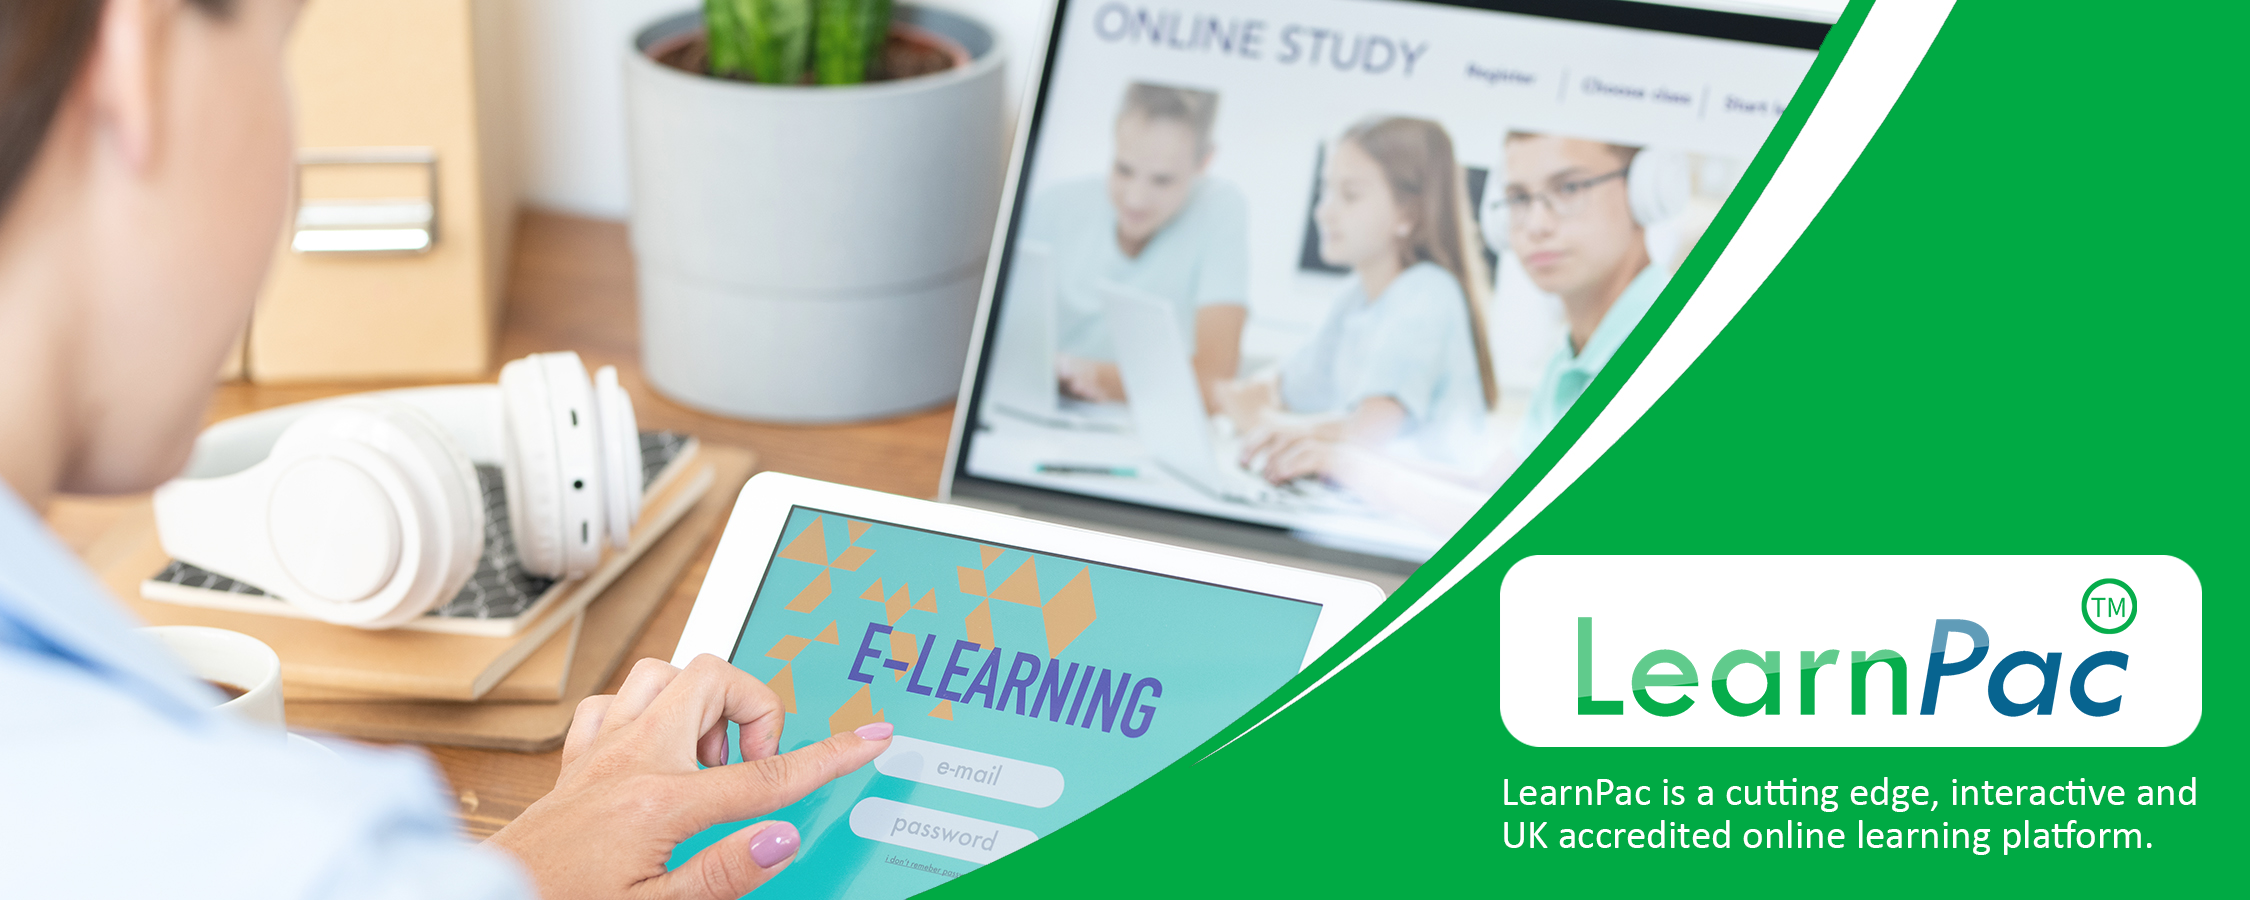 Parkinson’s Disease - Online Learning Courses - E-Learning Courses - LearnPac Systems UK -